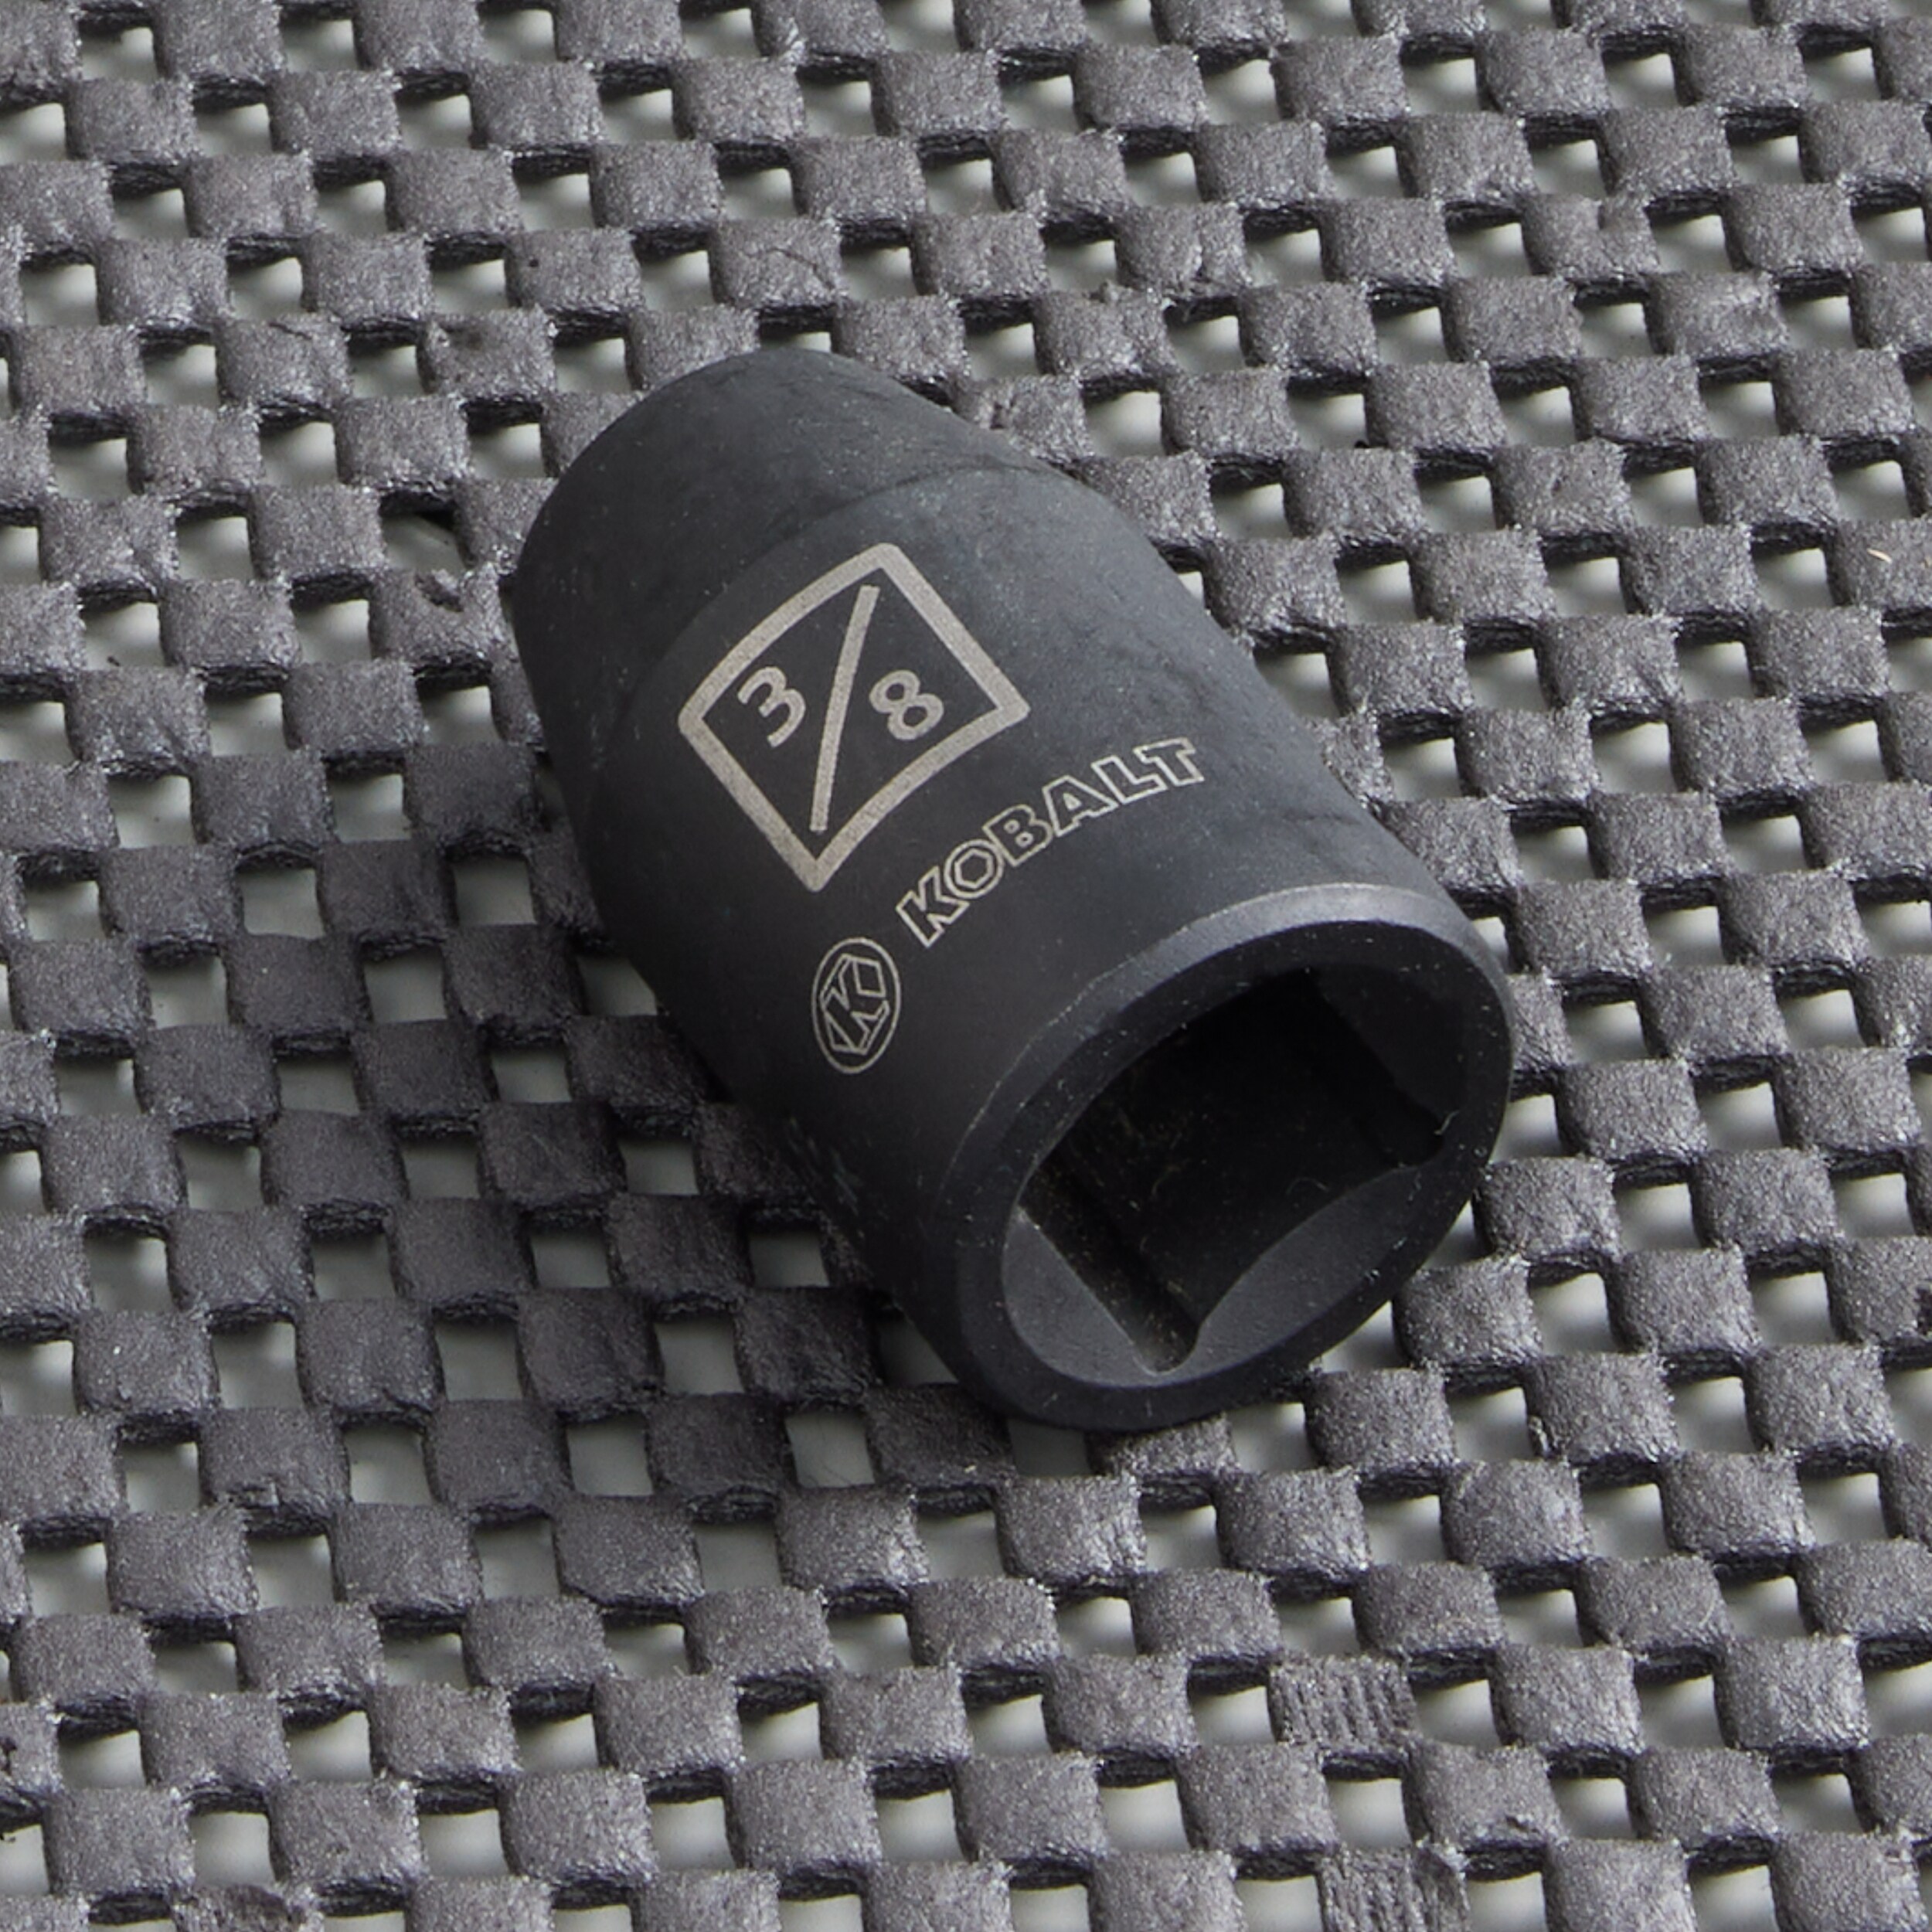 YUQIYU Heavy Duty Steel Impact Socket WRENCH 8-41mm Deep 1/2Sq Square Drive 6 Point Hexagon 12 13 15 1619 20 24 27 30 36 38 41 Size : 17mm 